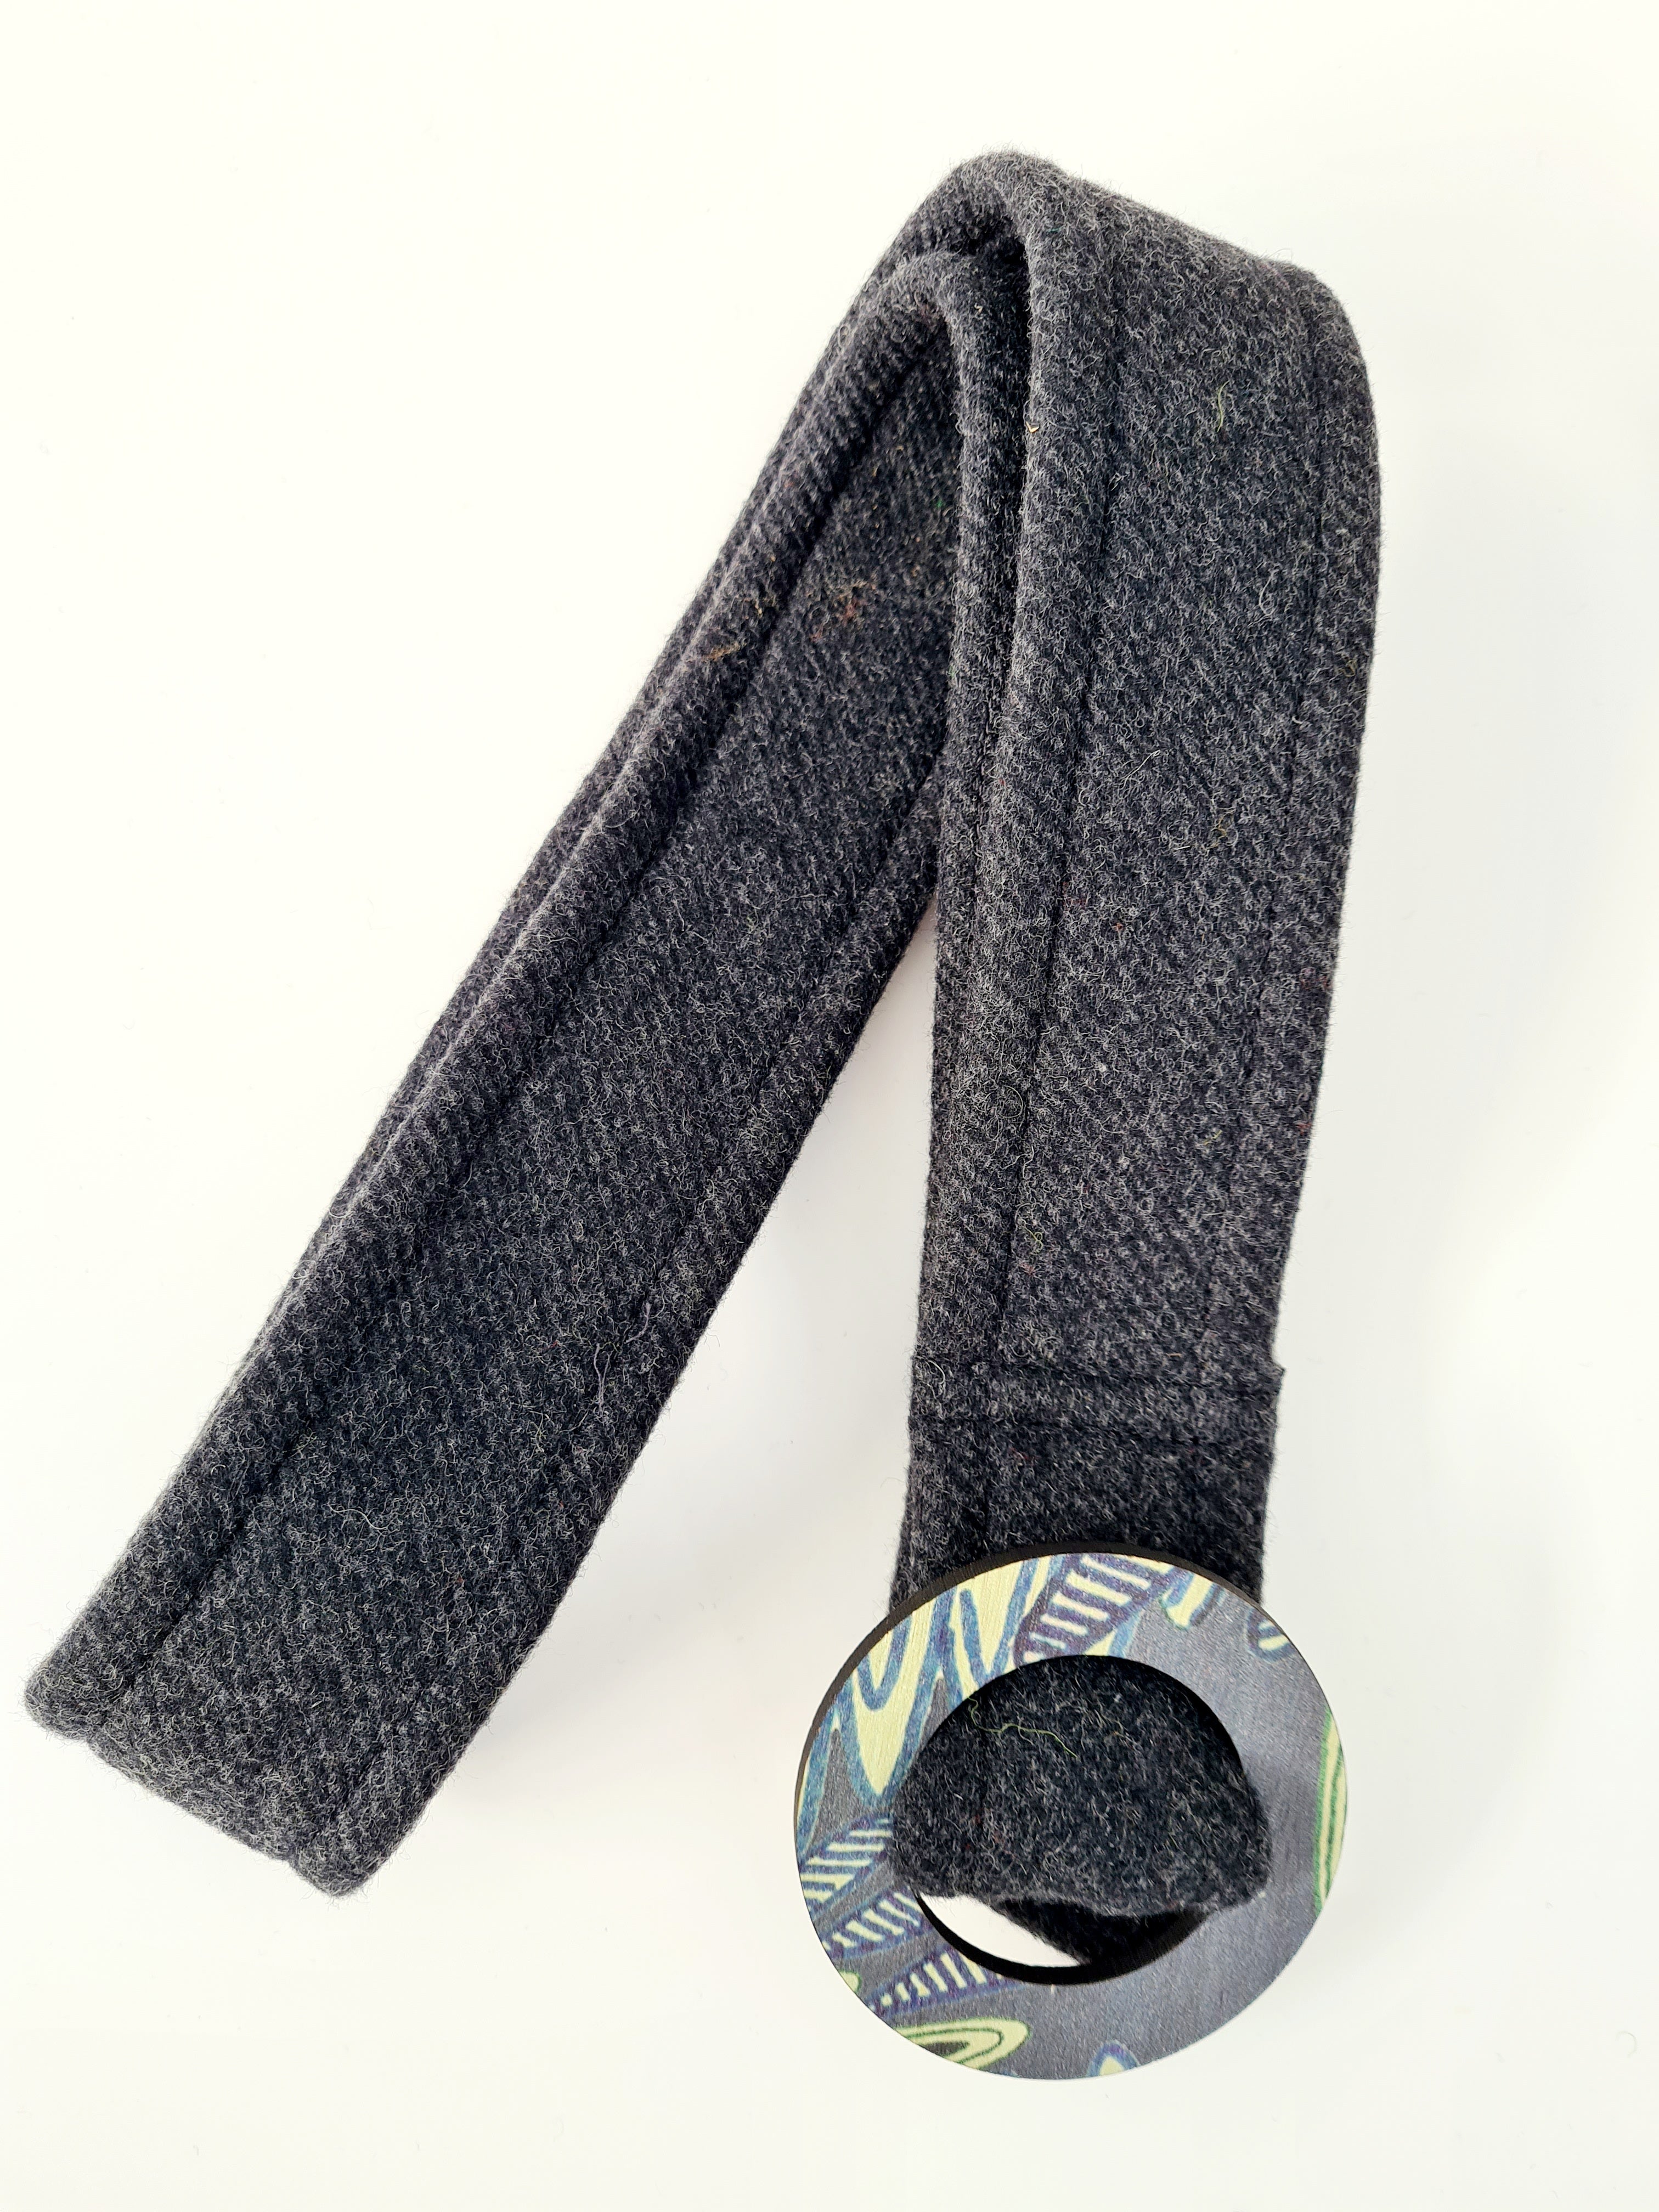 Tasmanian Oak Belts - Organic Wool Belt Buckles The Spotted Quoll Carbon Printed Tas Oak XL - 140cm